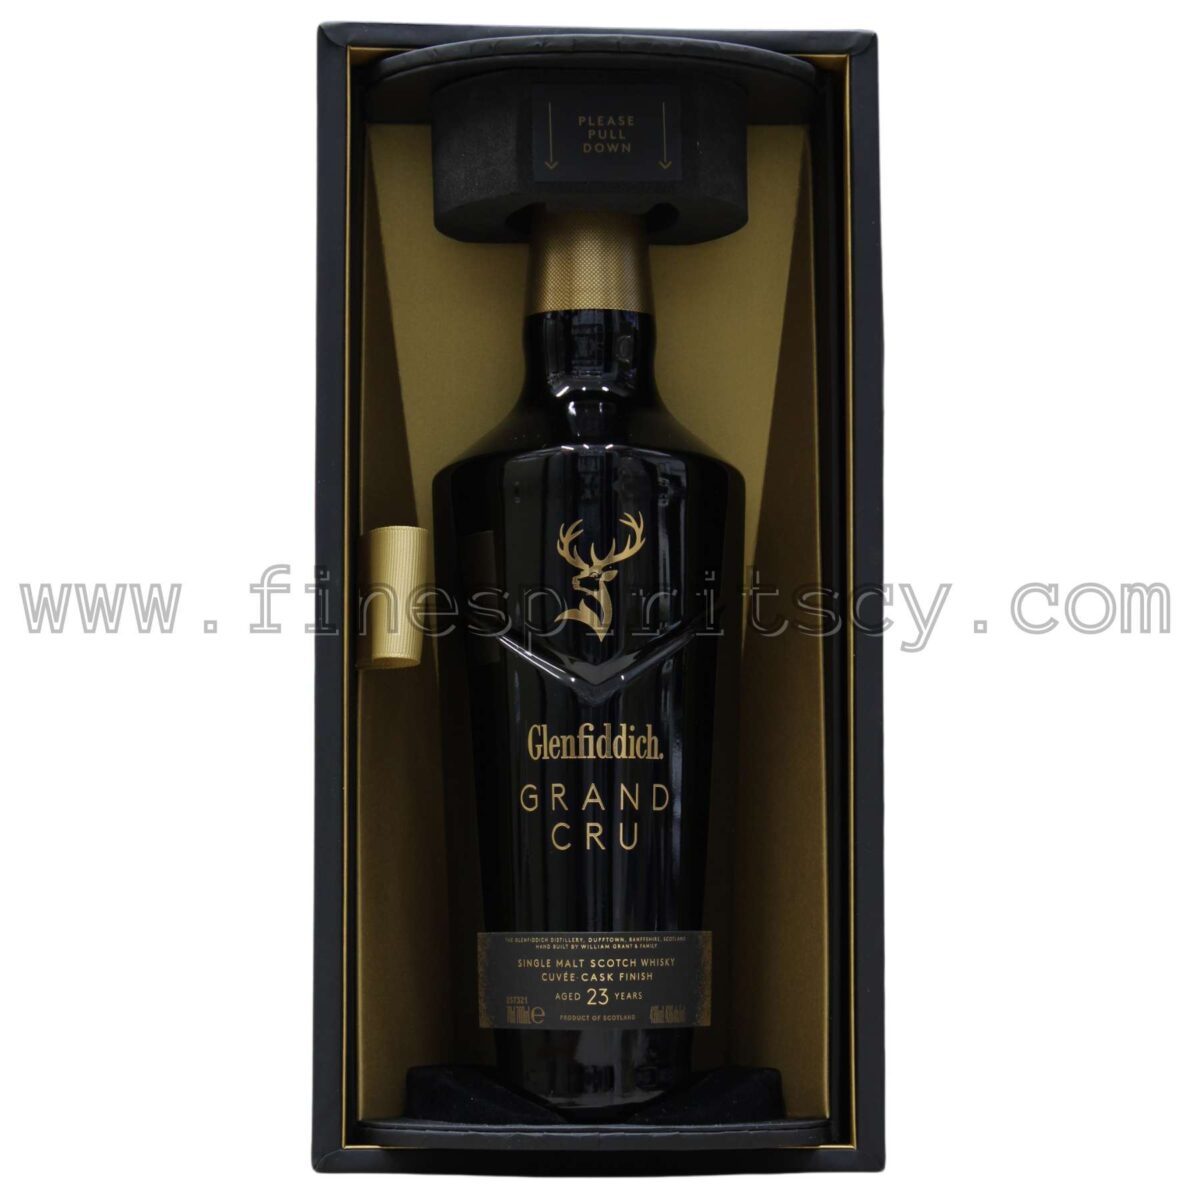 Glenfiddich 23 Years Old Grand Cru Open Box Bottle Cyprus Price Order Online